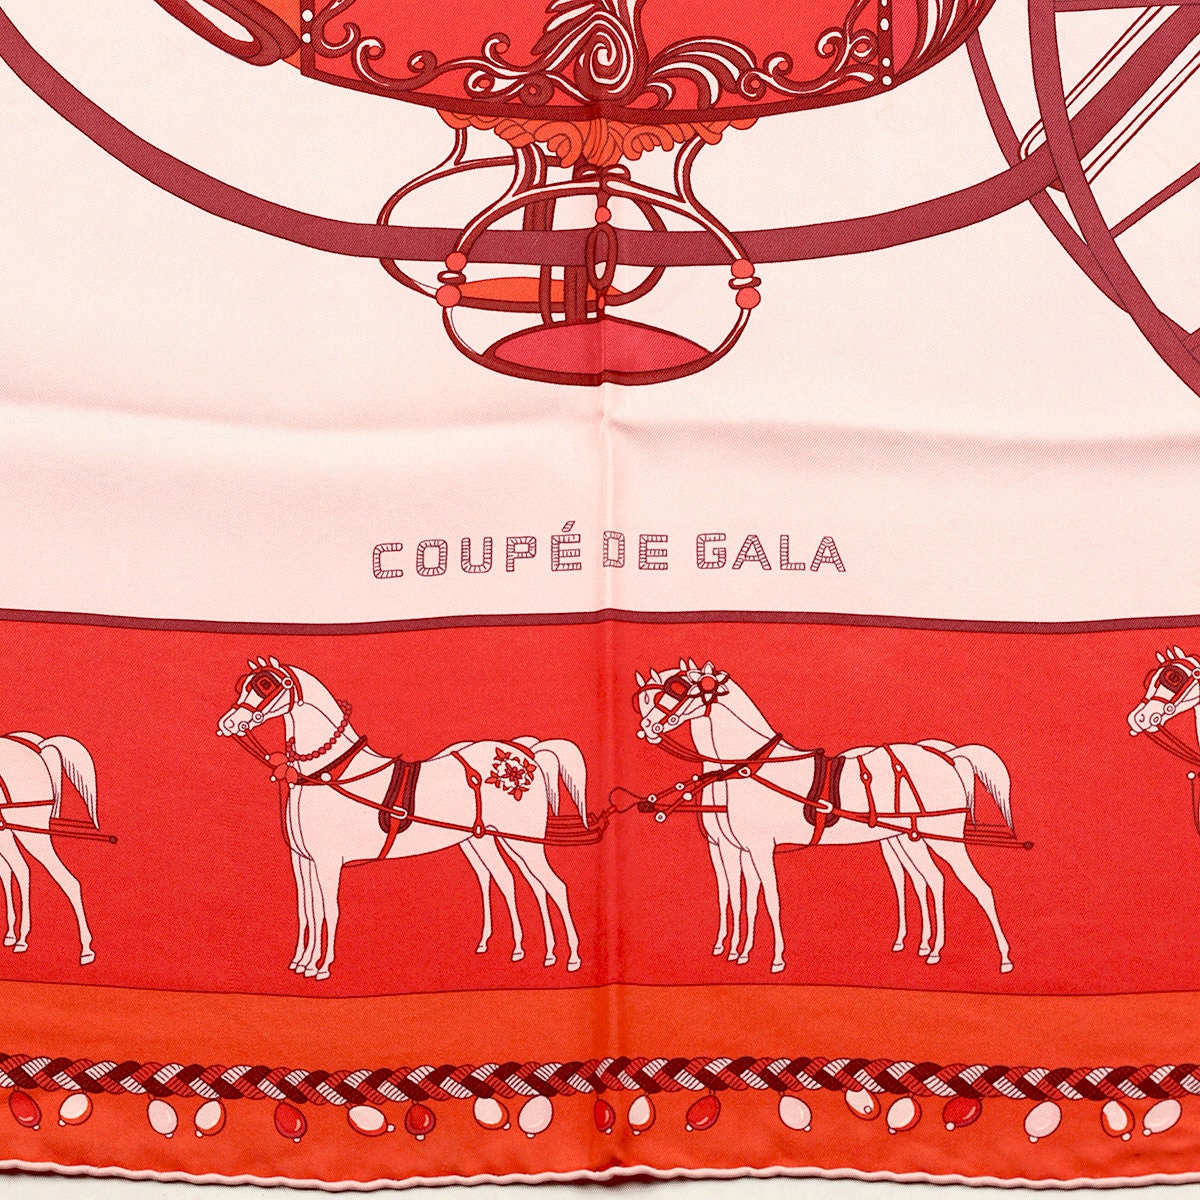 Hermes Scarf "Coupé de Gala" by Wlodek Kaminski 90cm Silk Wash Scarf | Carre Foulard